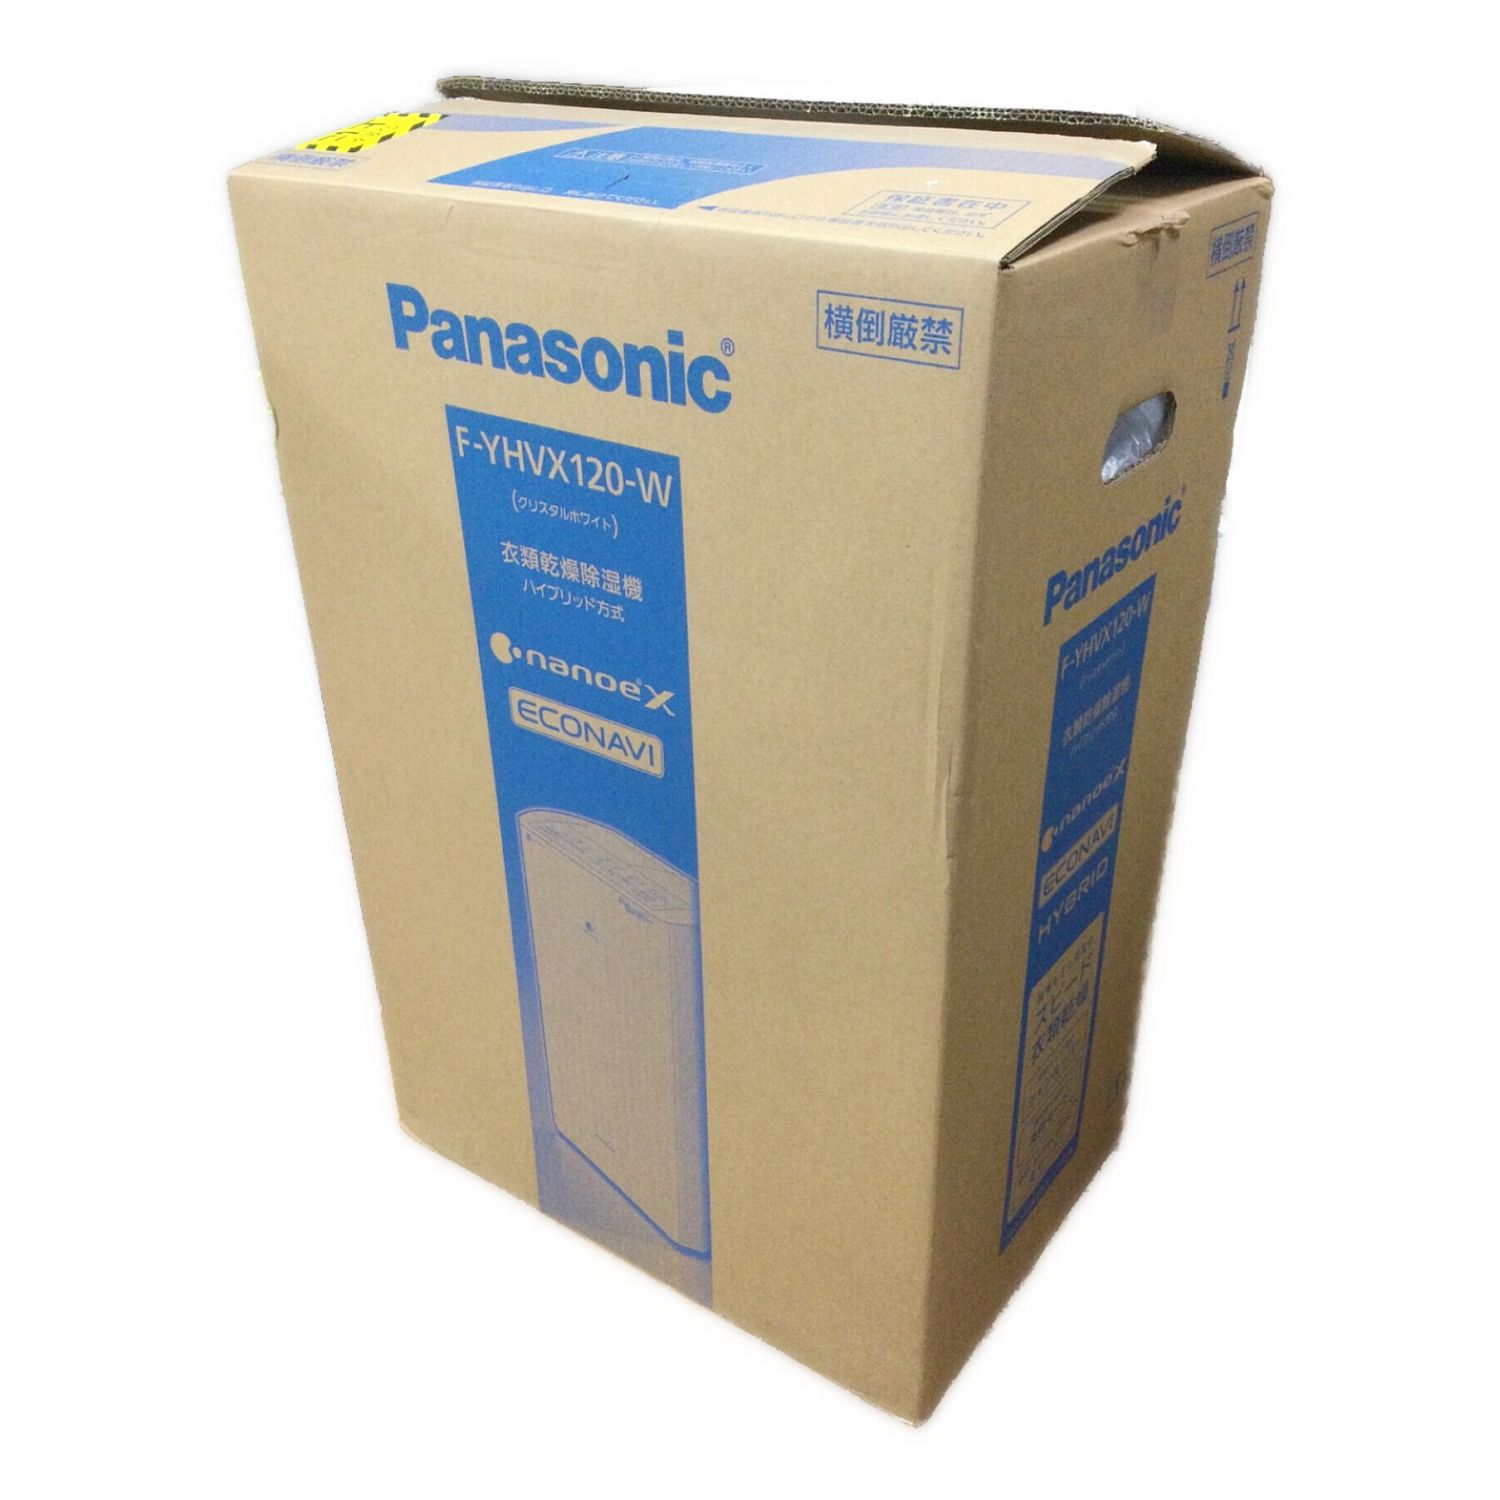 Panasonic (パナソニック) 衣類乾燥除湿機 F-YHVX120-W クリスタル